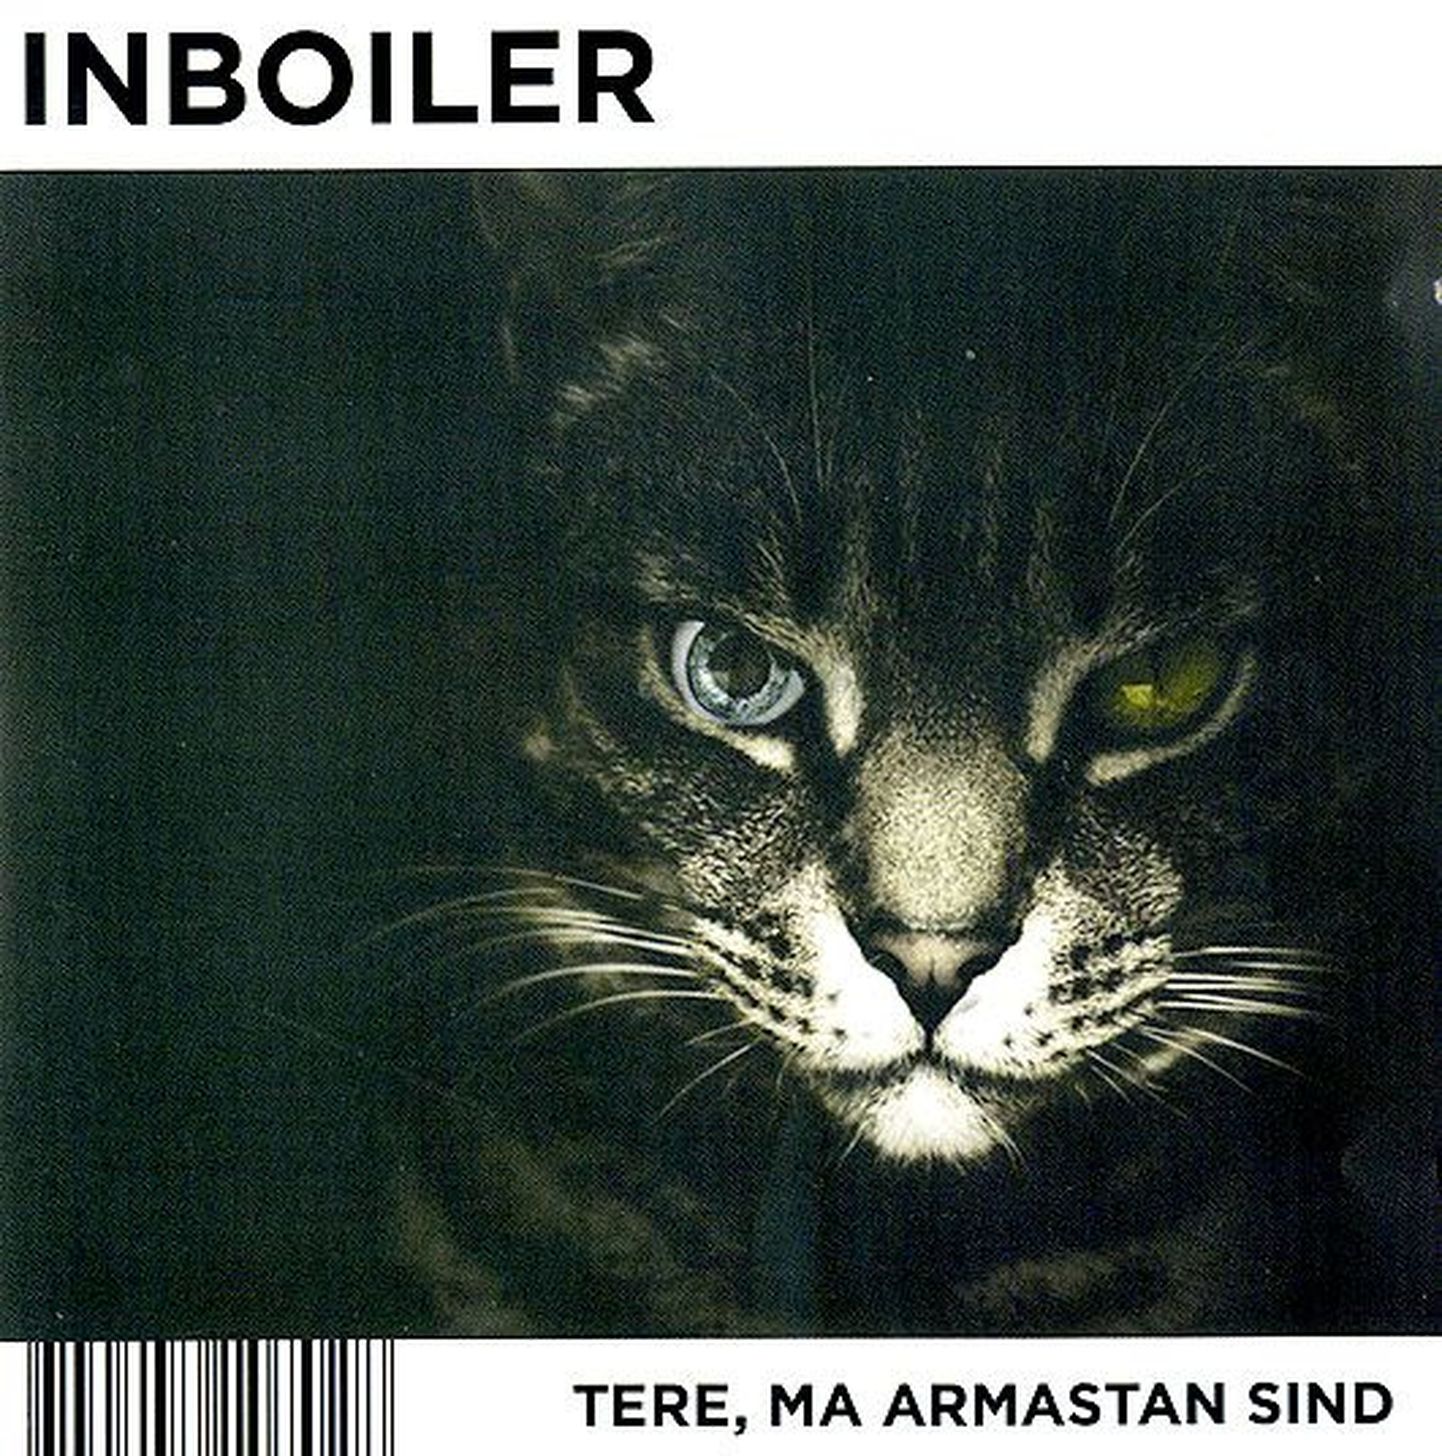 InBoiler, «Tere, ma armastan sind»,
12 laulu, CD, 2013.